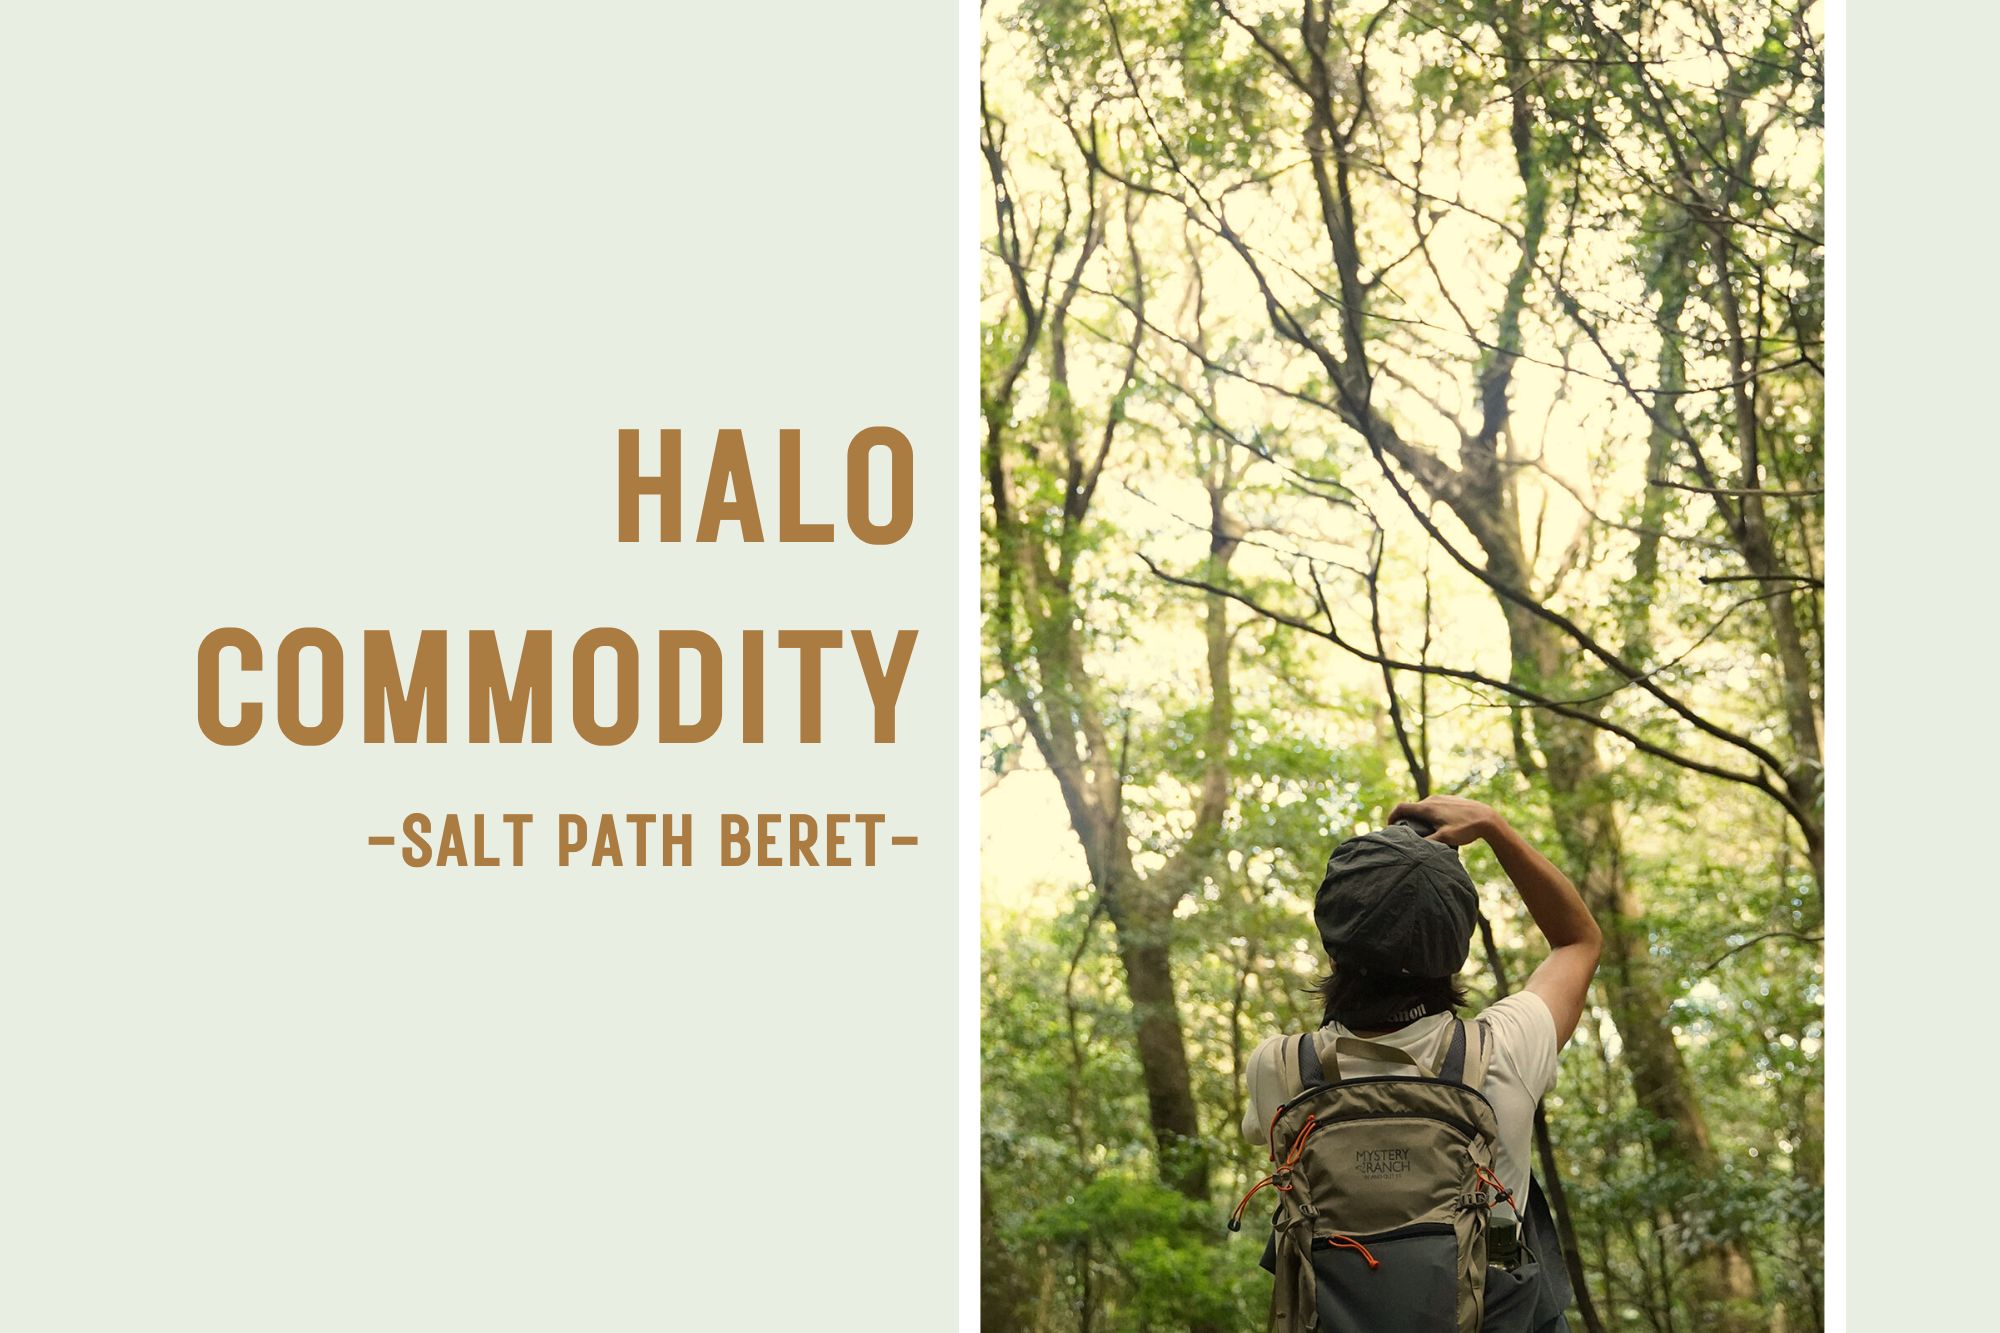 halo commodity "Salt Path Beret"